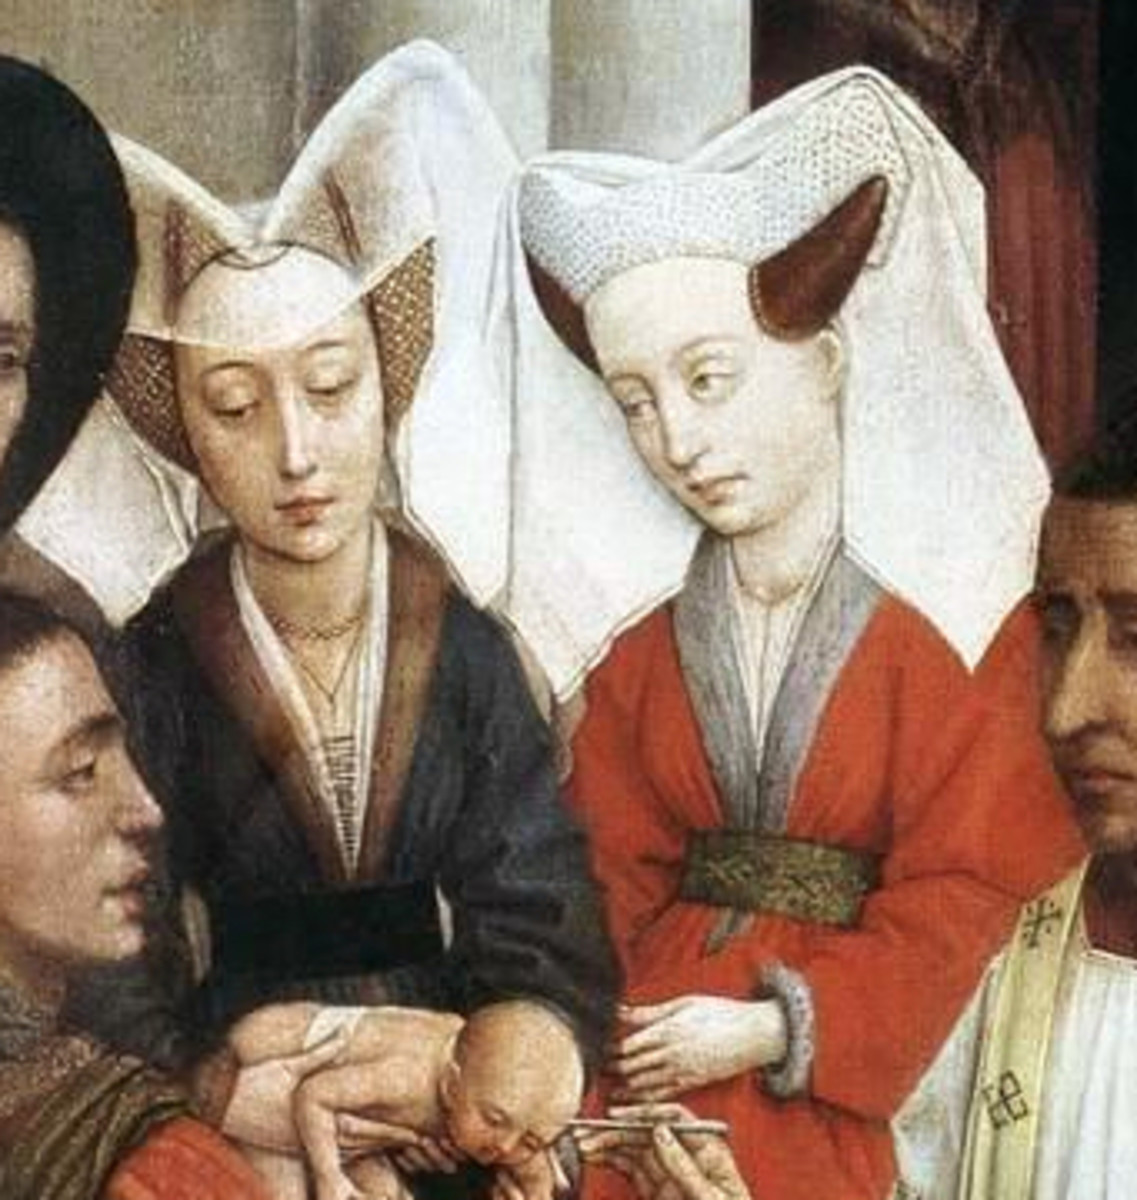 Hennins featured in a 15th century paining by Rogier van der Waden